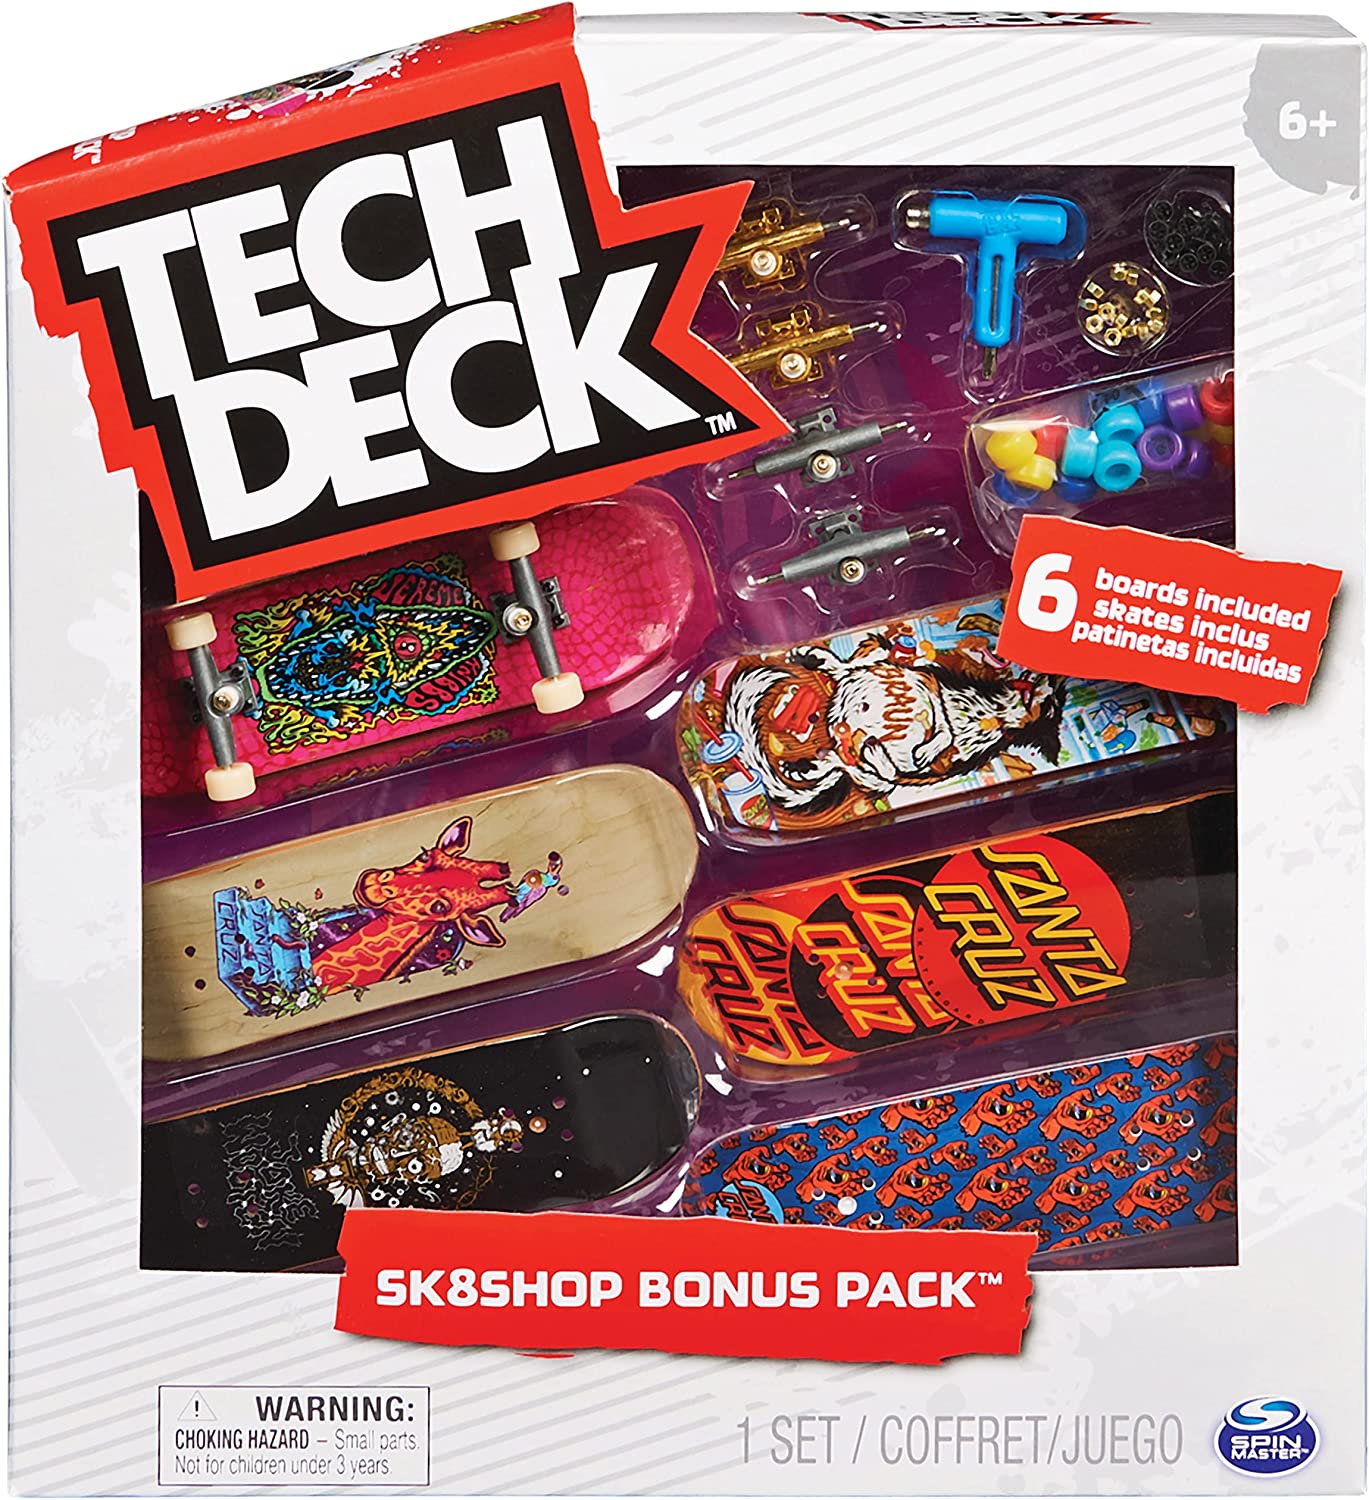 Tech Deck - Sk8shop Bonus Pack Santa Cruz - Fingerboard Set